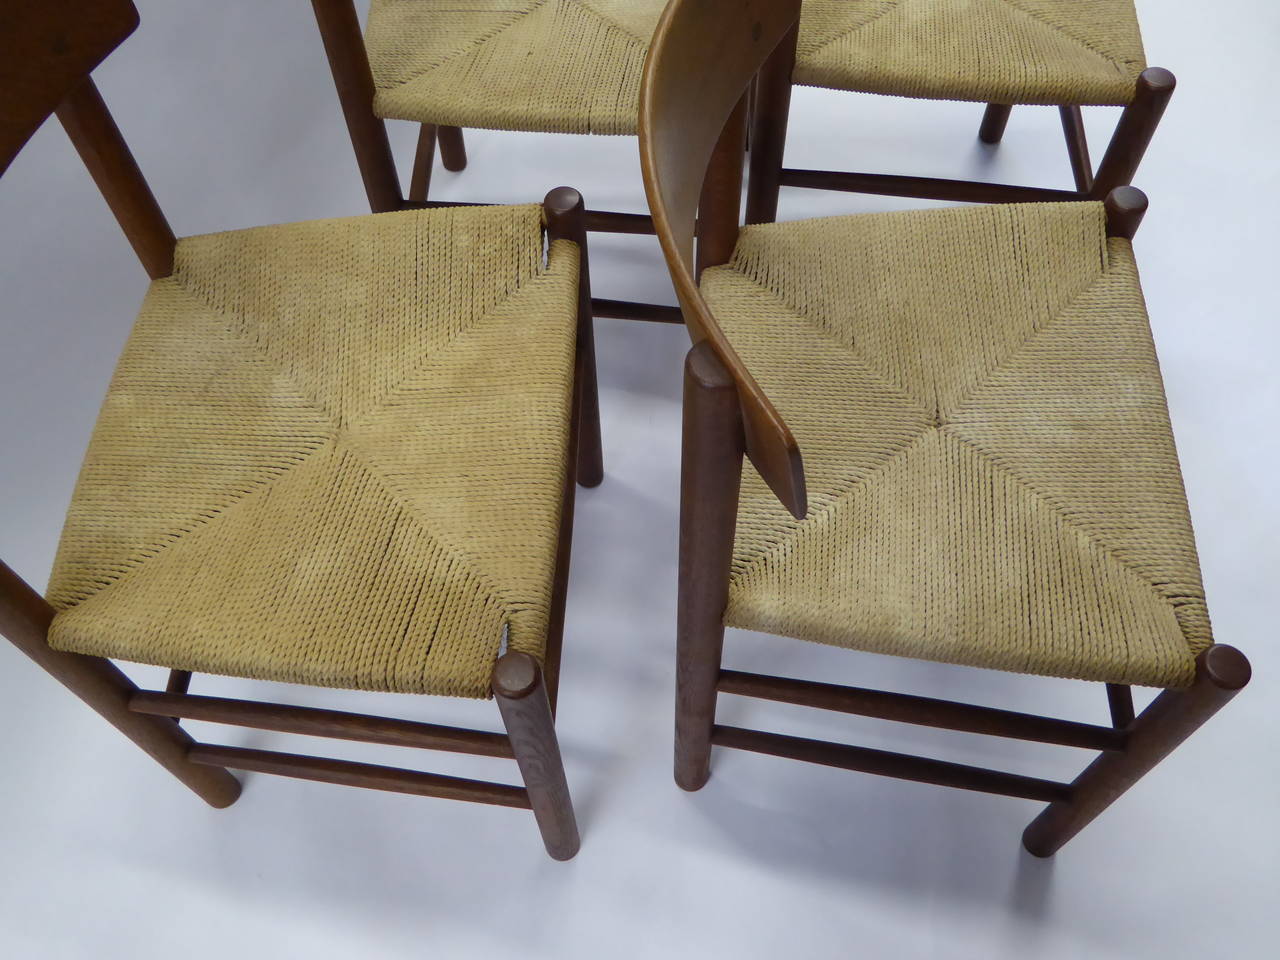 1940s Børge Morgensen J39 Chairs from FDB Mobler Denmark 1